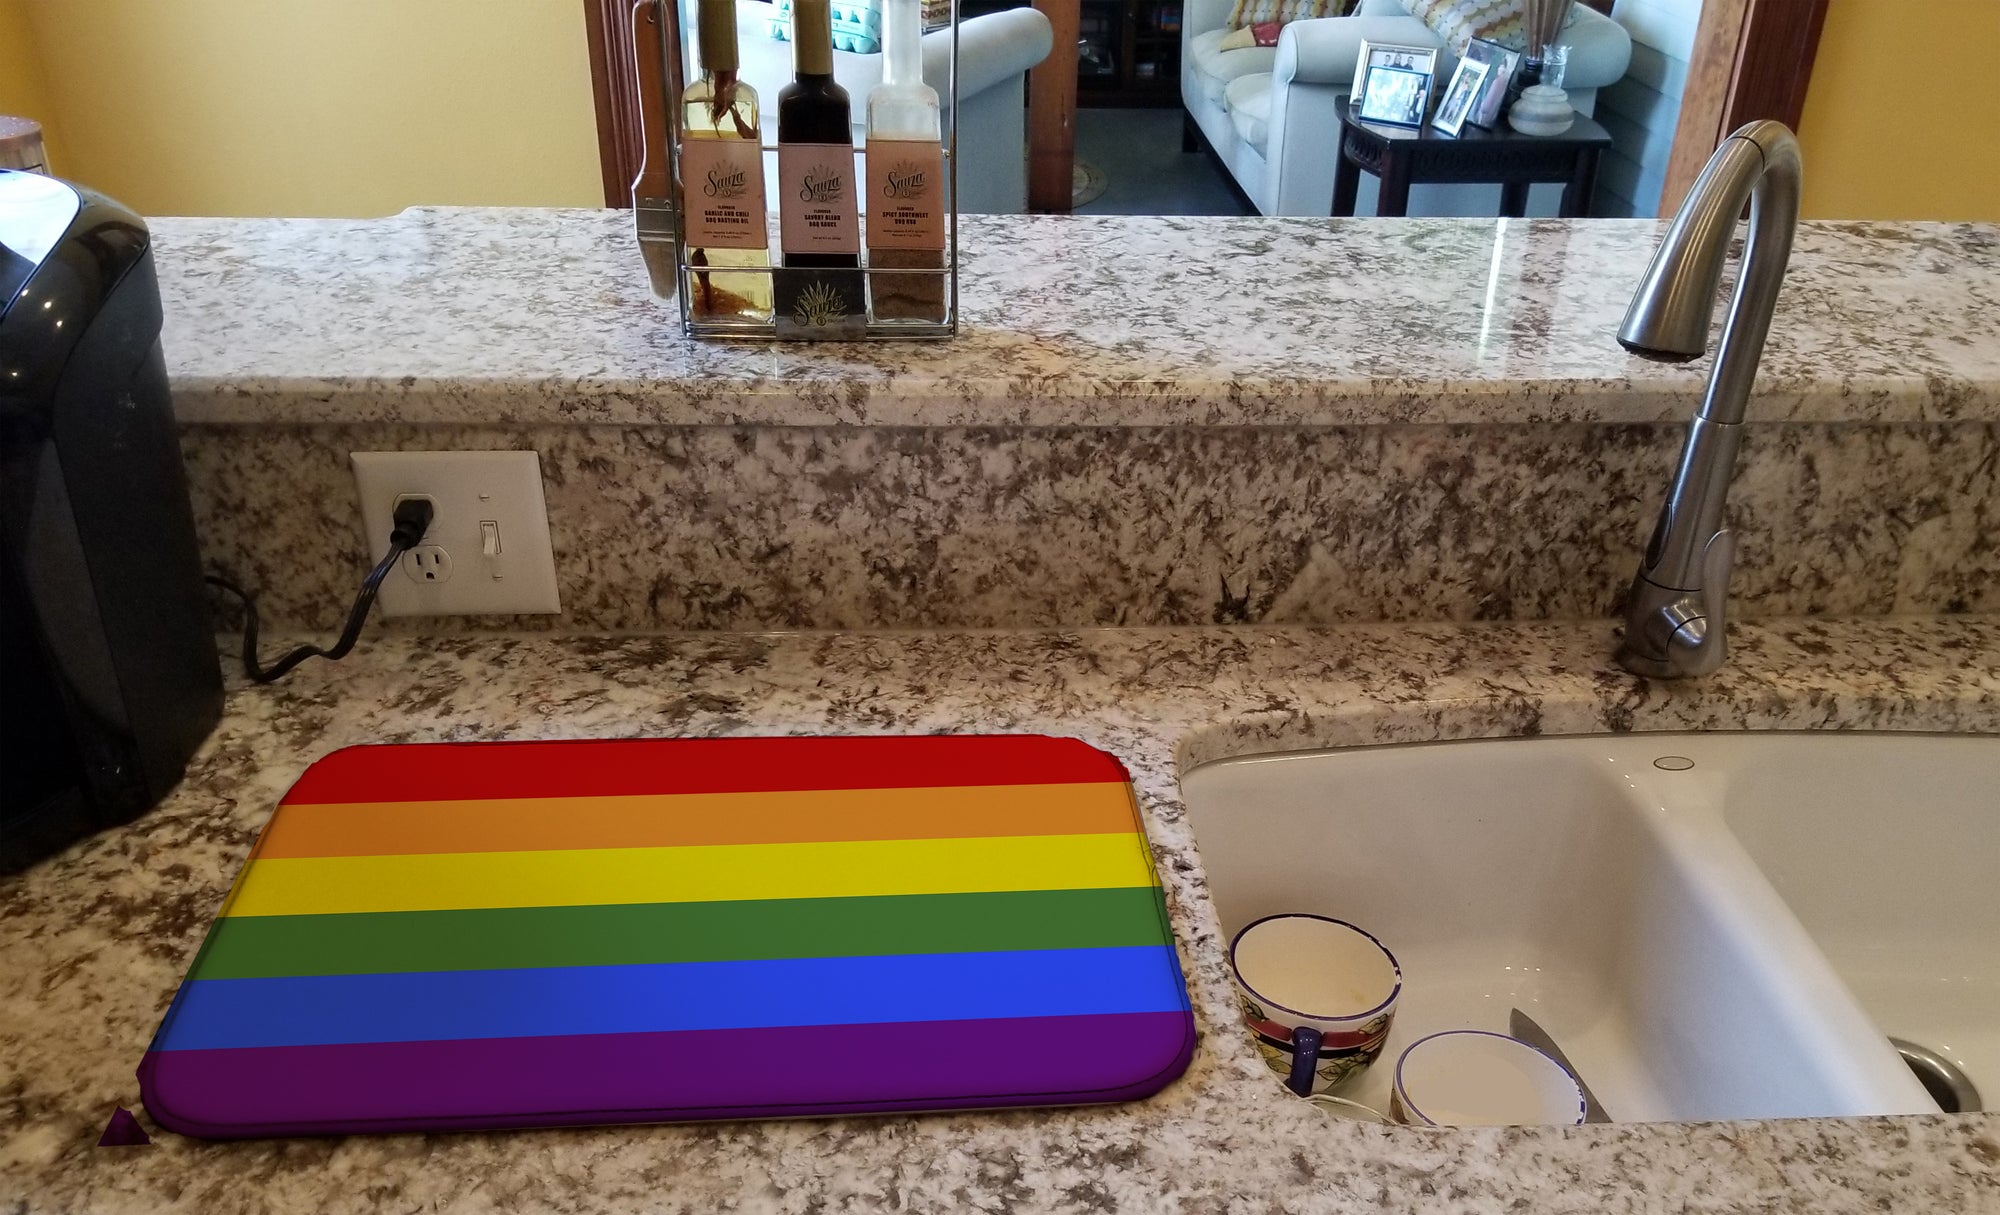 Gay Pride Dish Drying Mat